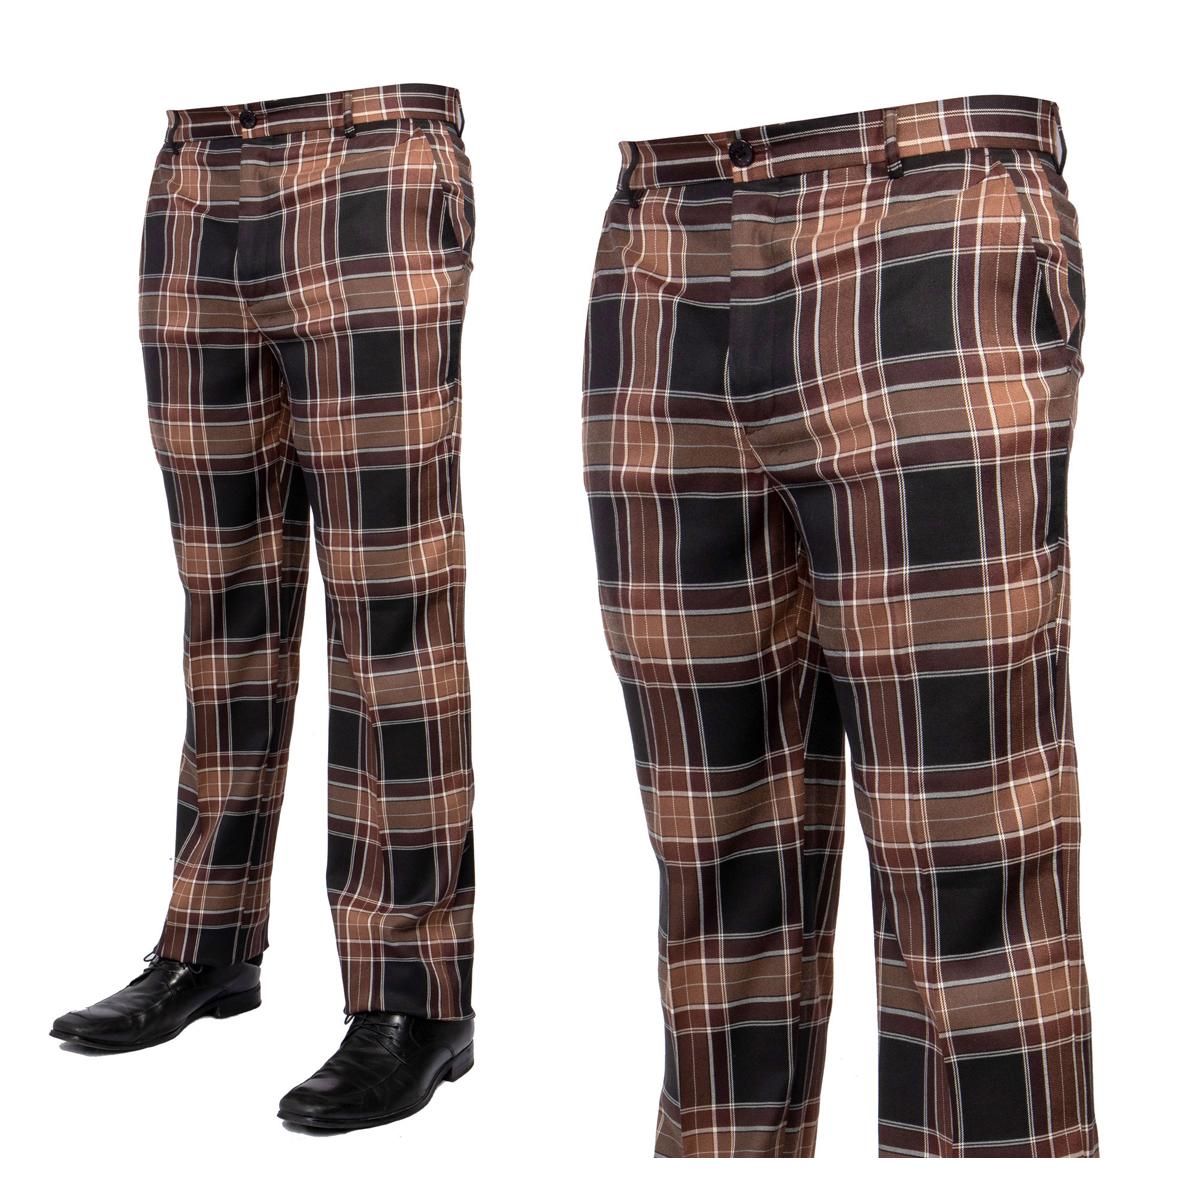 Prestige Brown and Black Plaid Flat Front Slacks For Men | Men's Pants